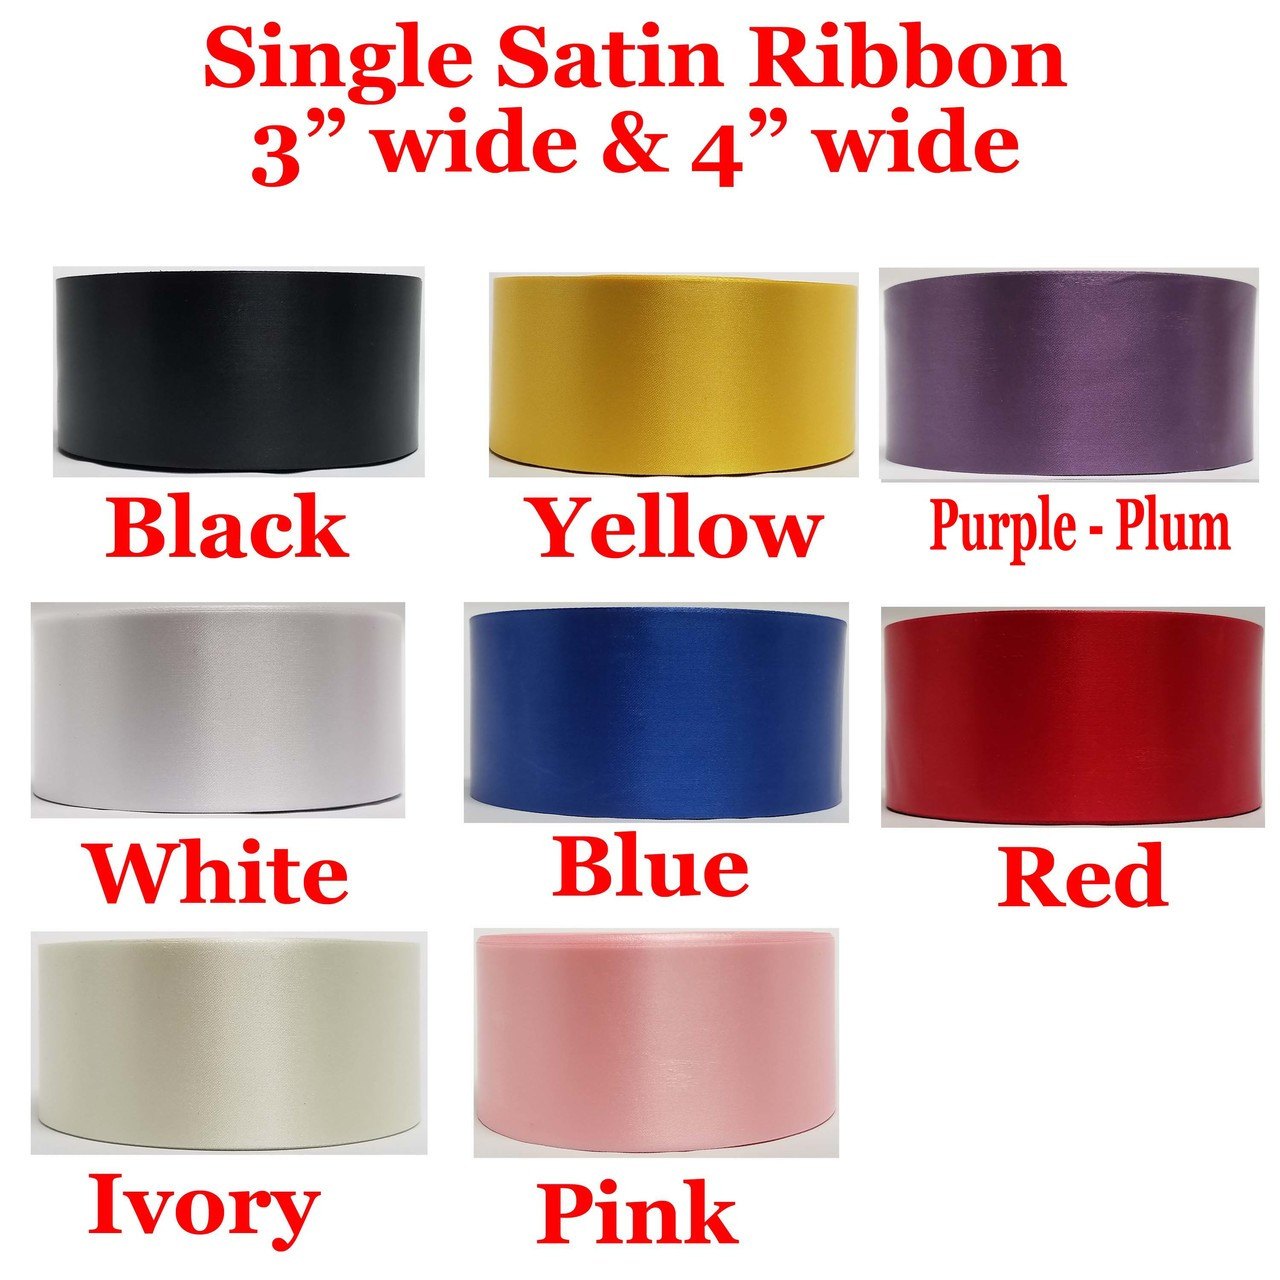 https://cdn11.bigcommerce.com/s-fm2dfa/images/stencil/1280x1280/products/1836/37178/single_ribbon_colors_copy__62049.1507387379.jpg?c=2?imbypass=on